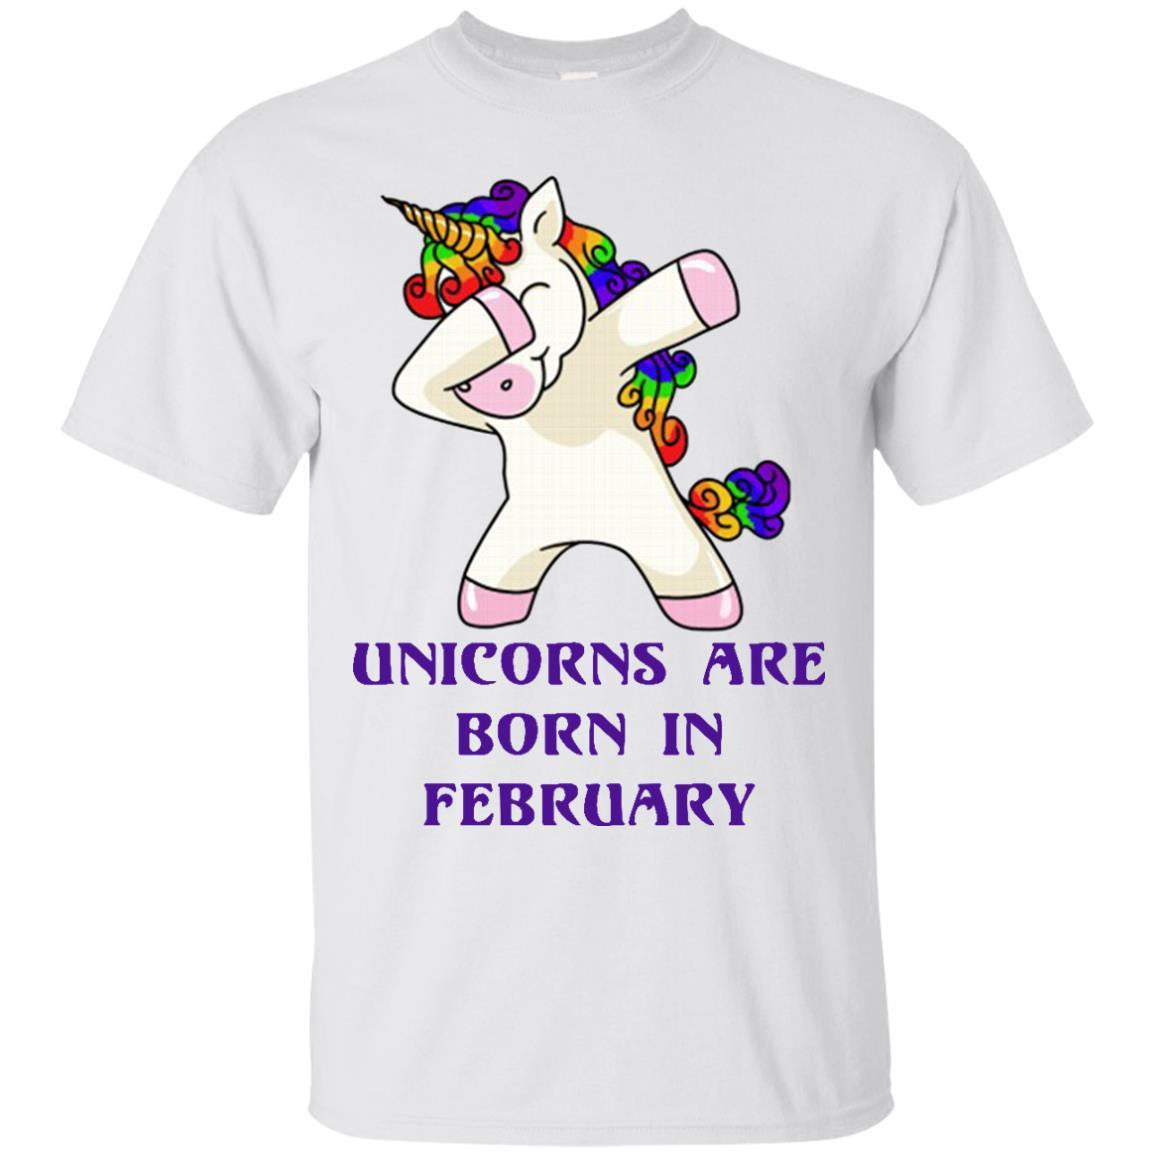 Dabbing Unicorns are Born in February shirt, tank top, racerback